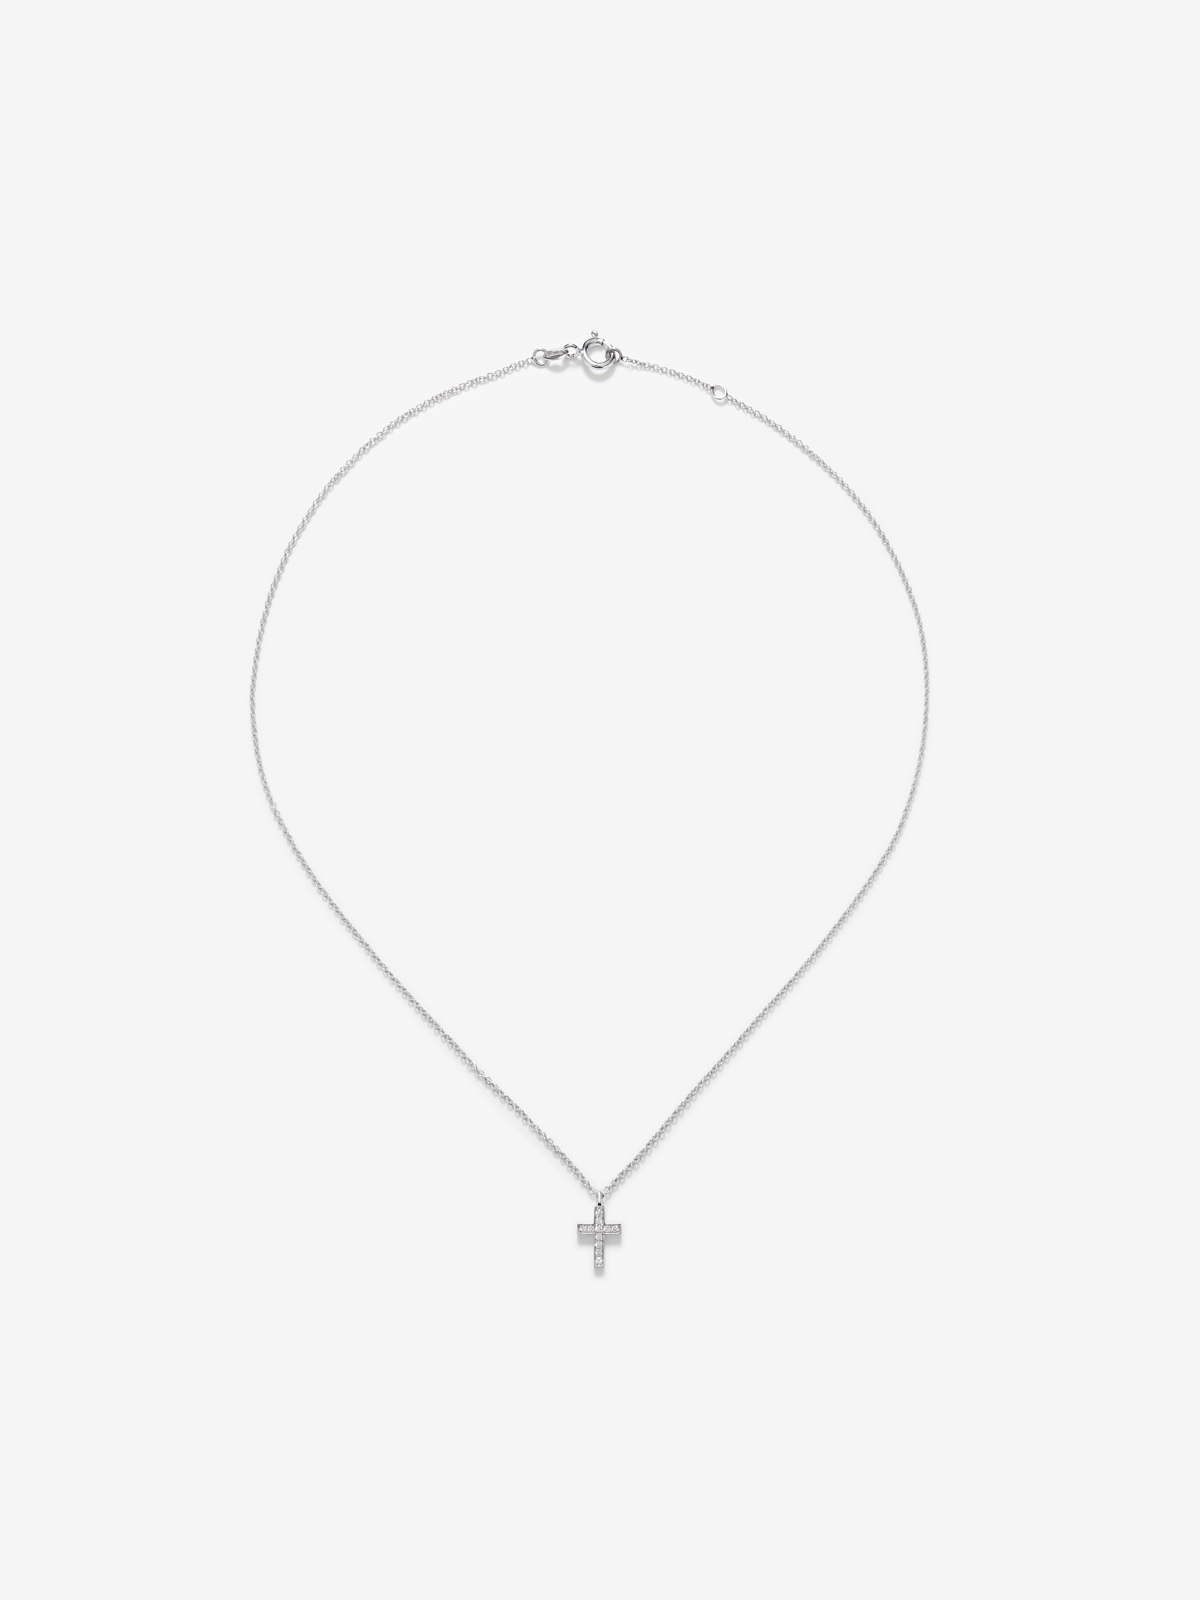 18kt White Gold Cross pendant with diamonds